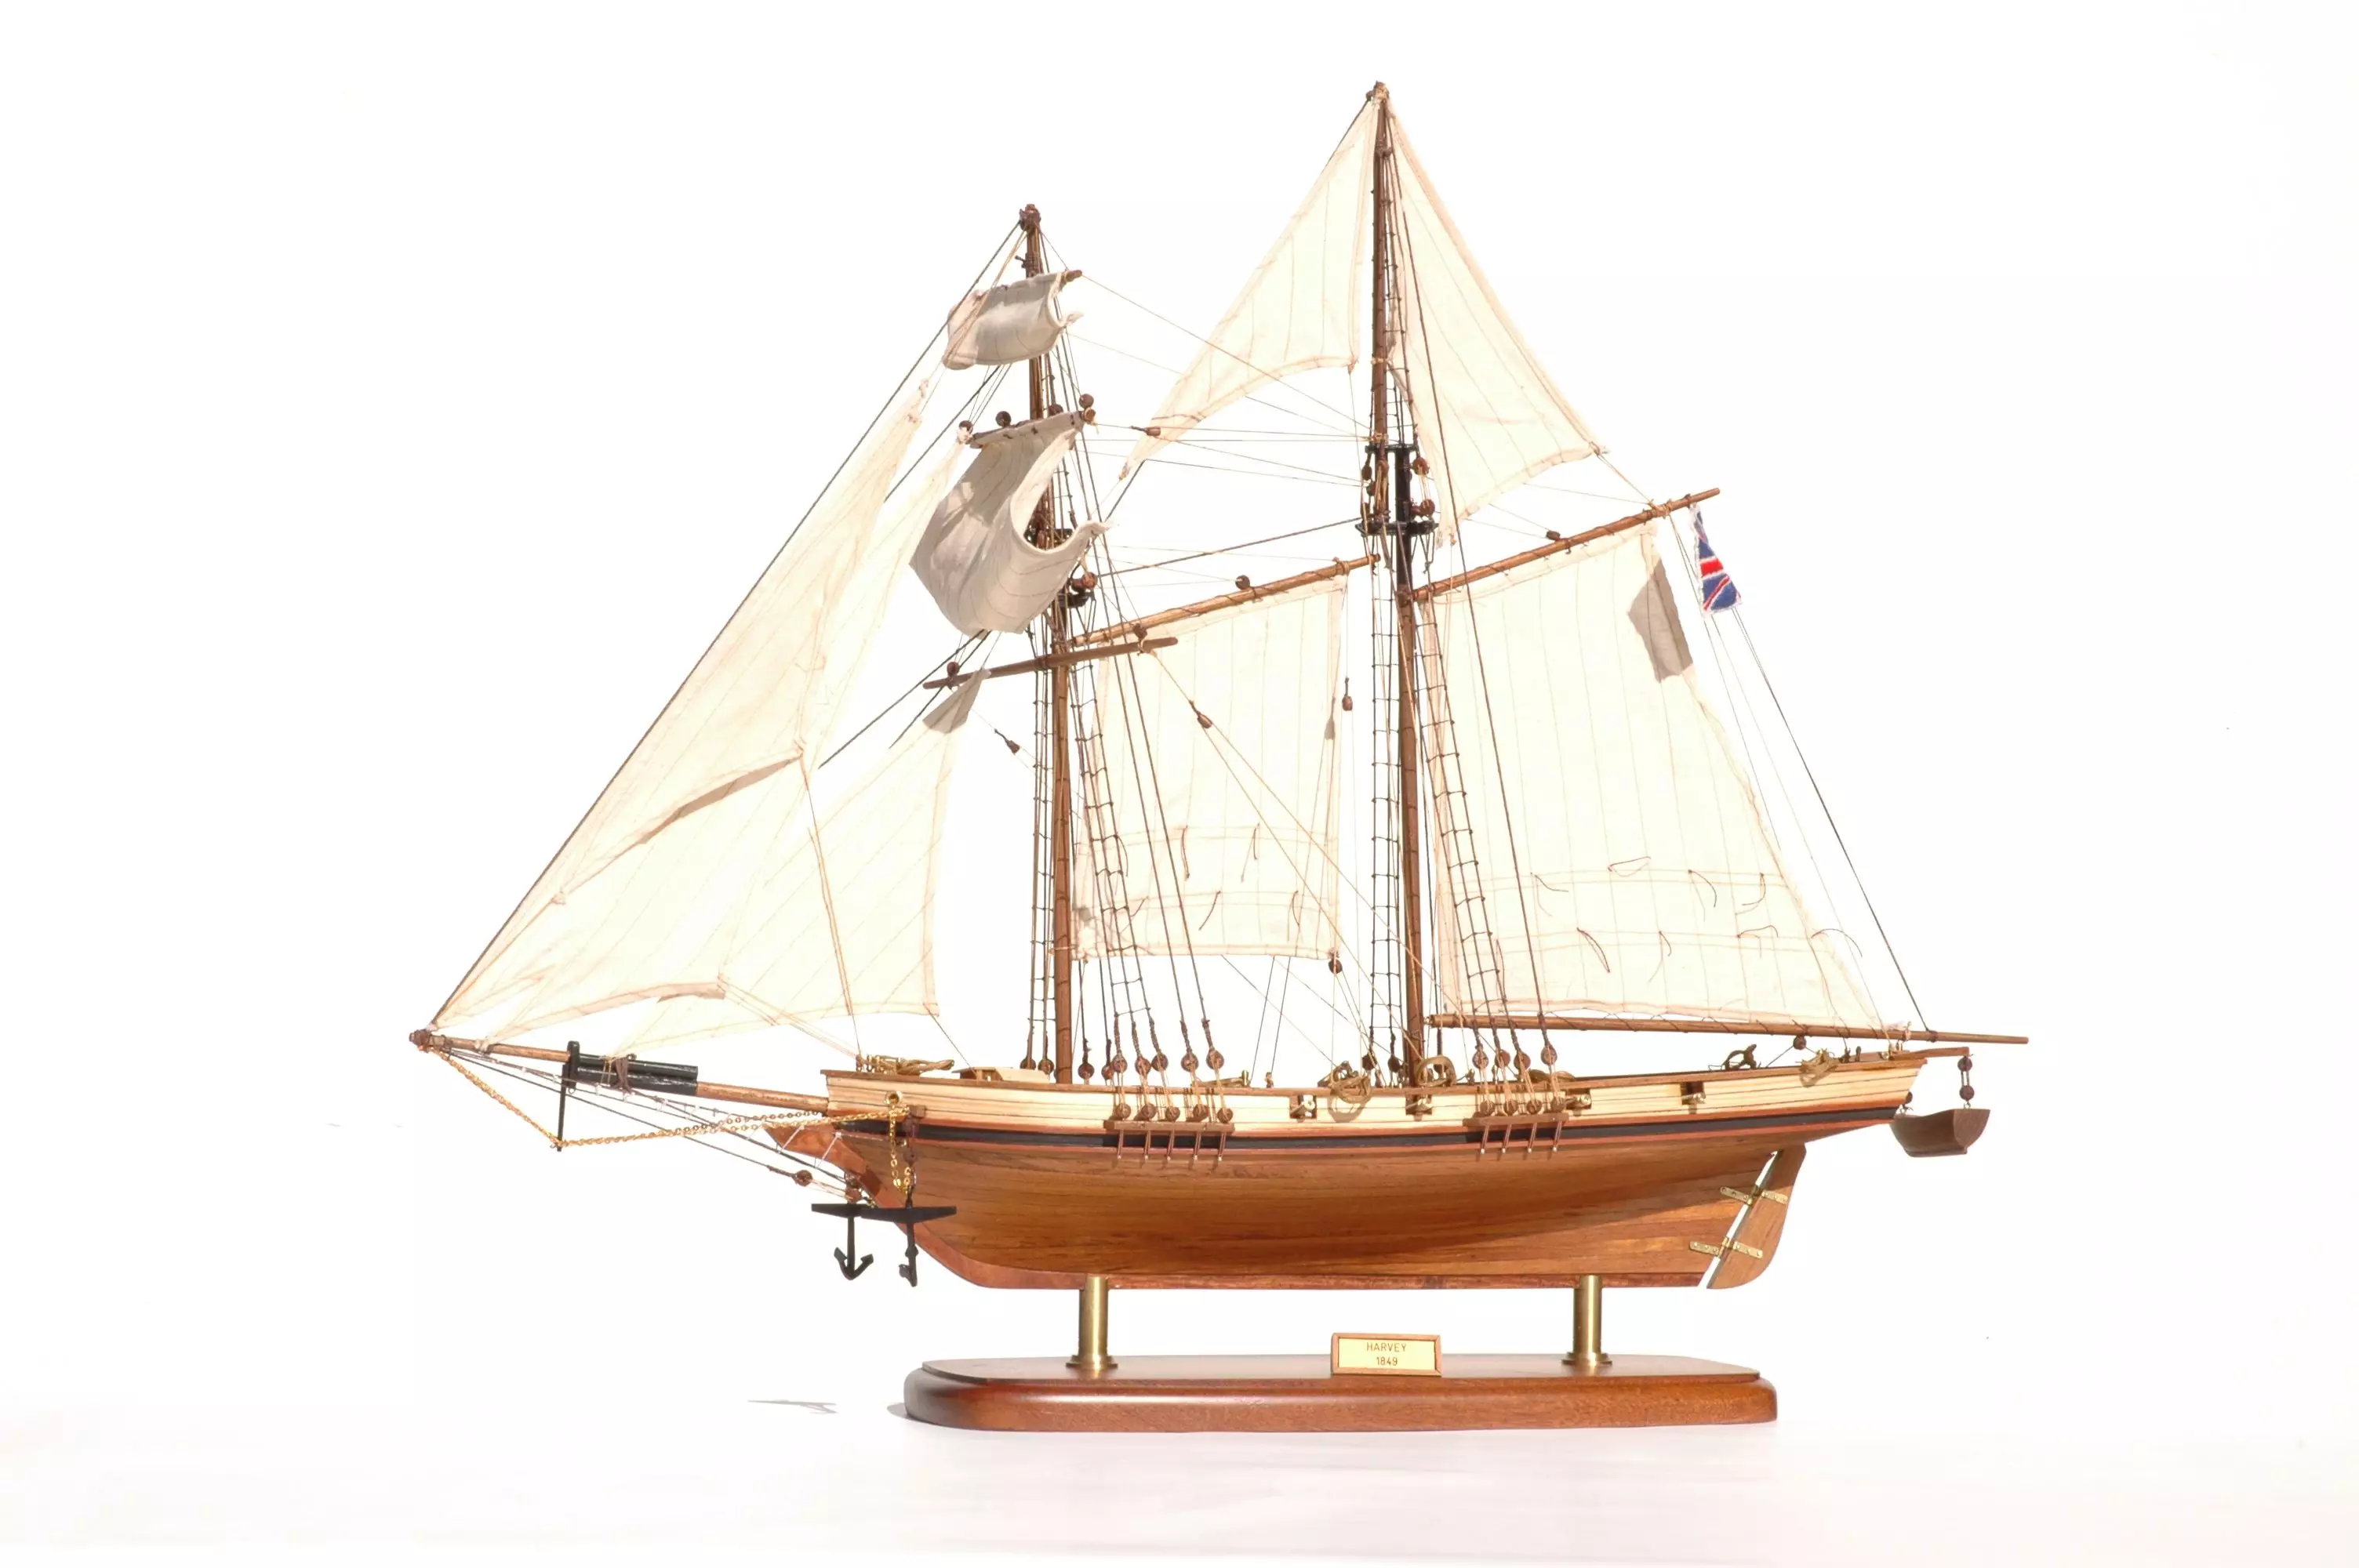 Harvey Model Boat (Superior Range) - PSM